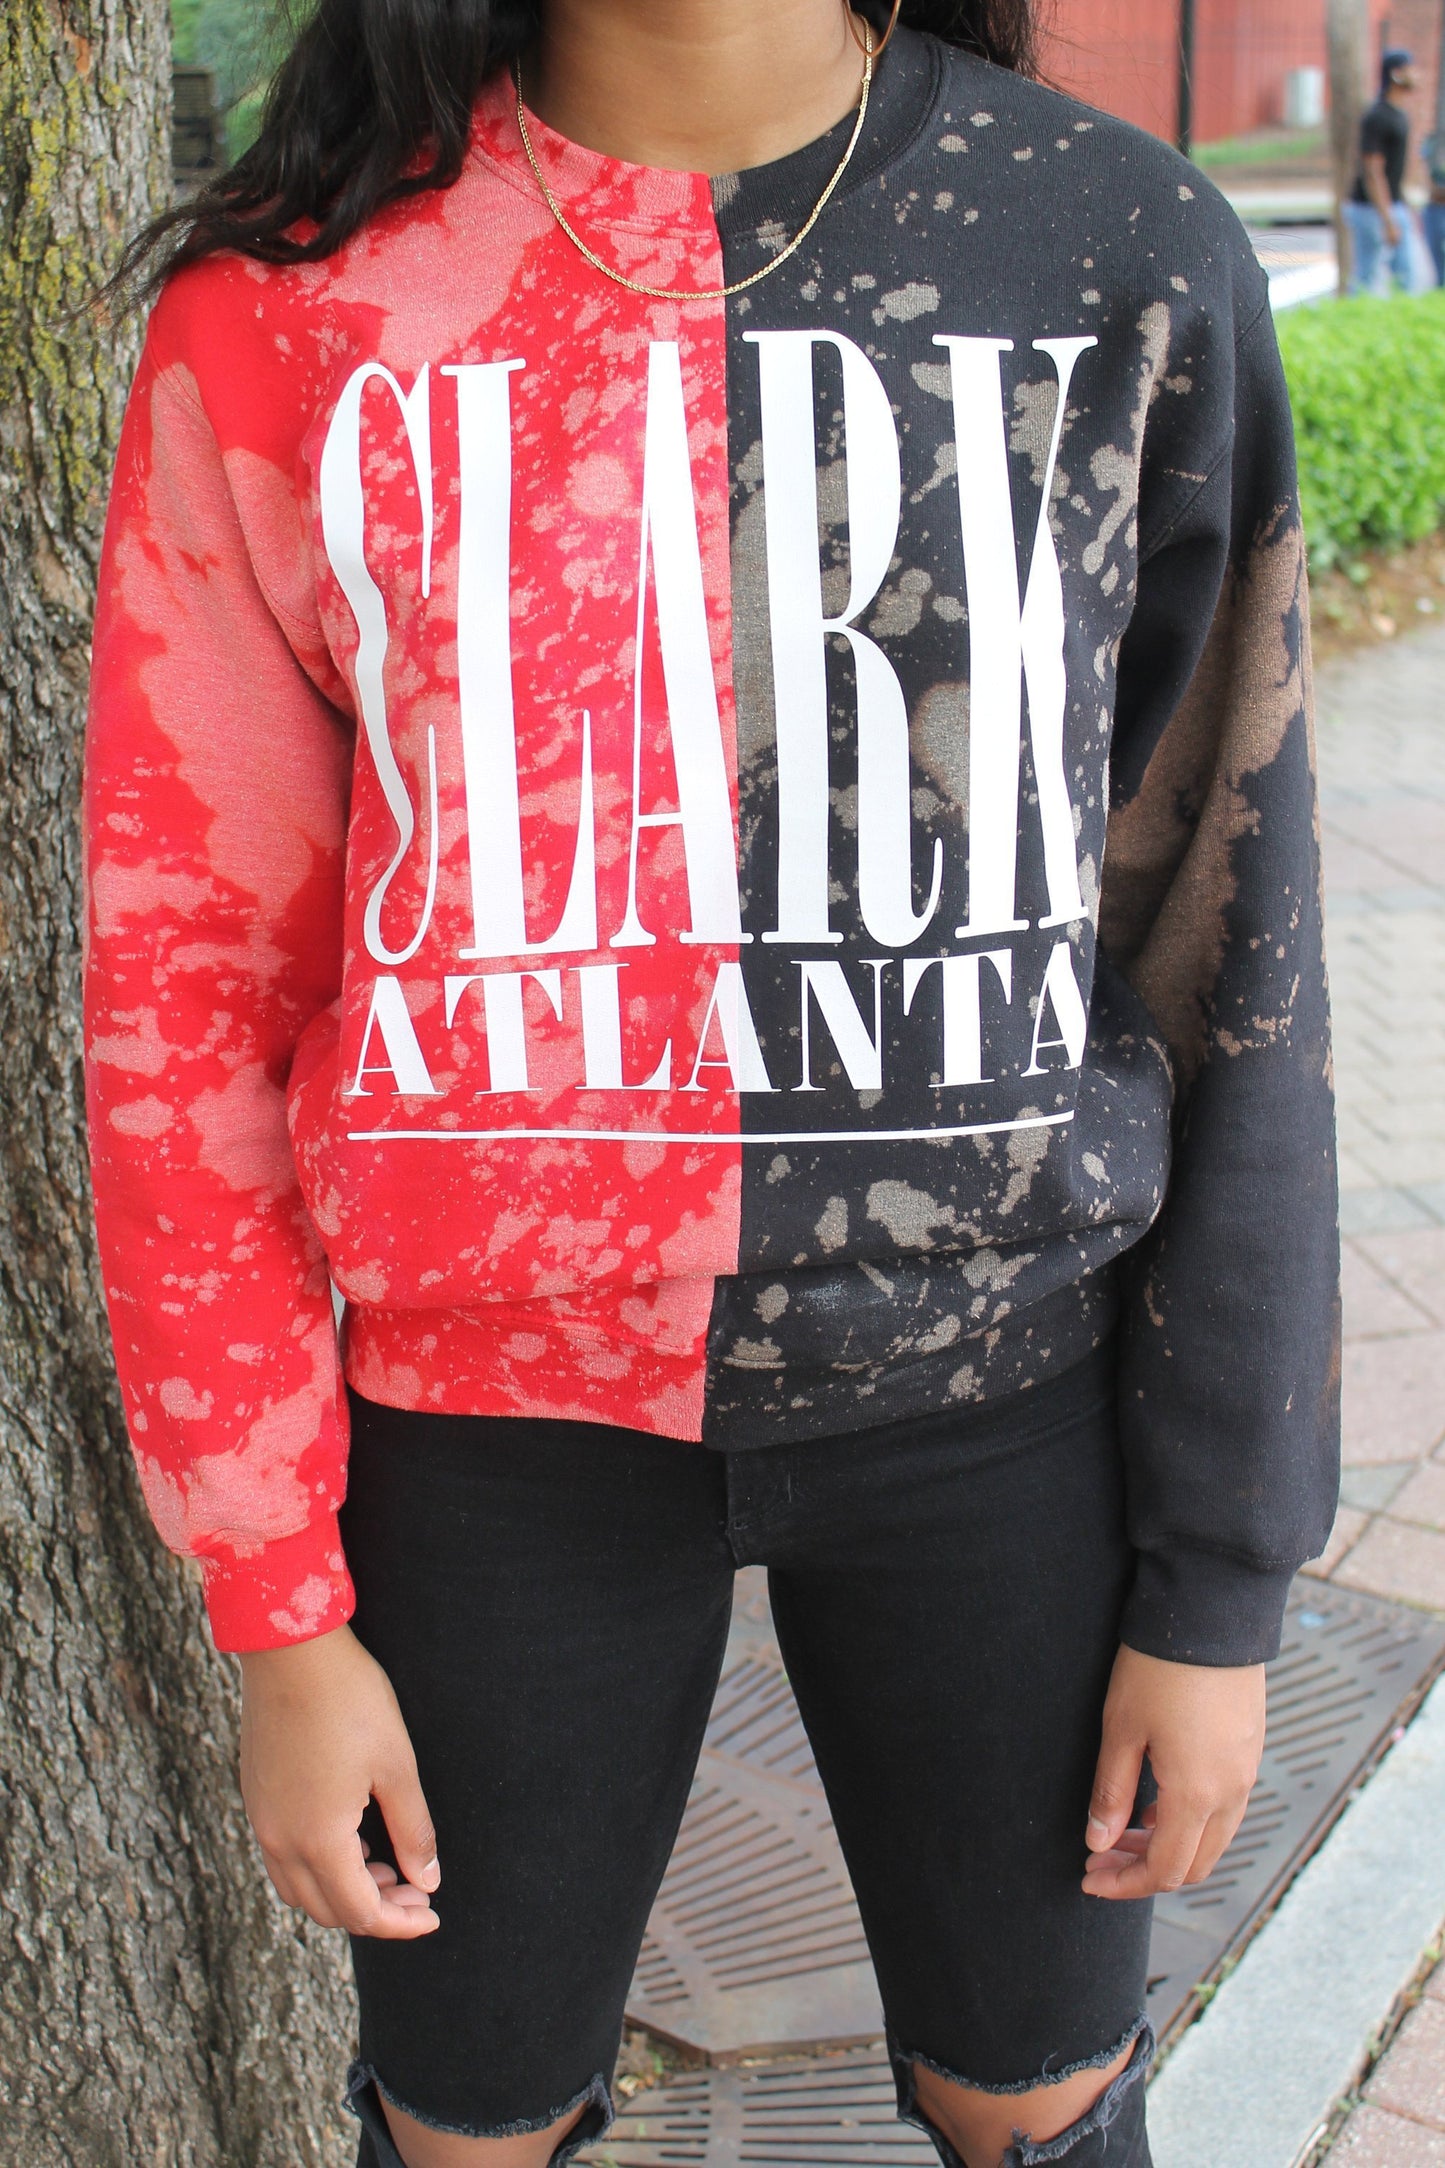 Handmade Clark Atlanta Red Black Half and Half Hand Bleached Crew Neck Unisex Sweatshirt